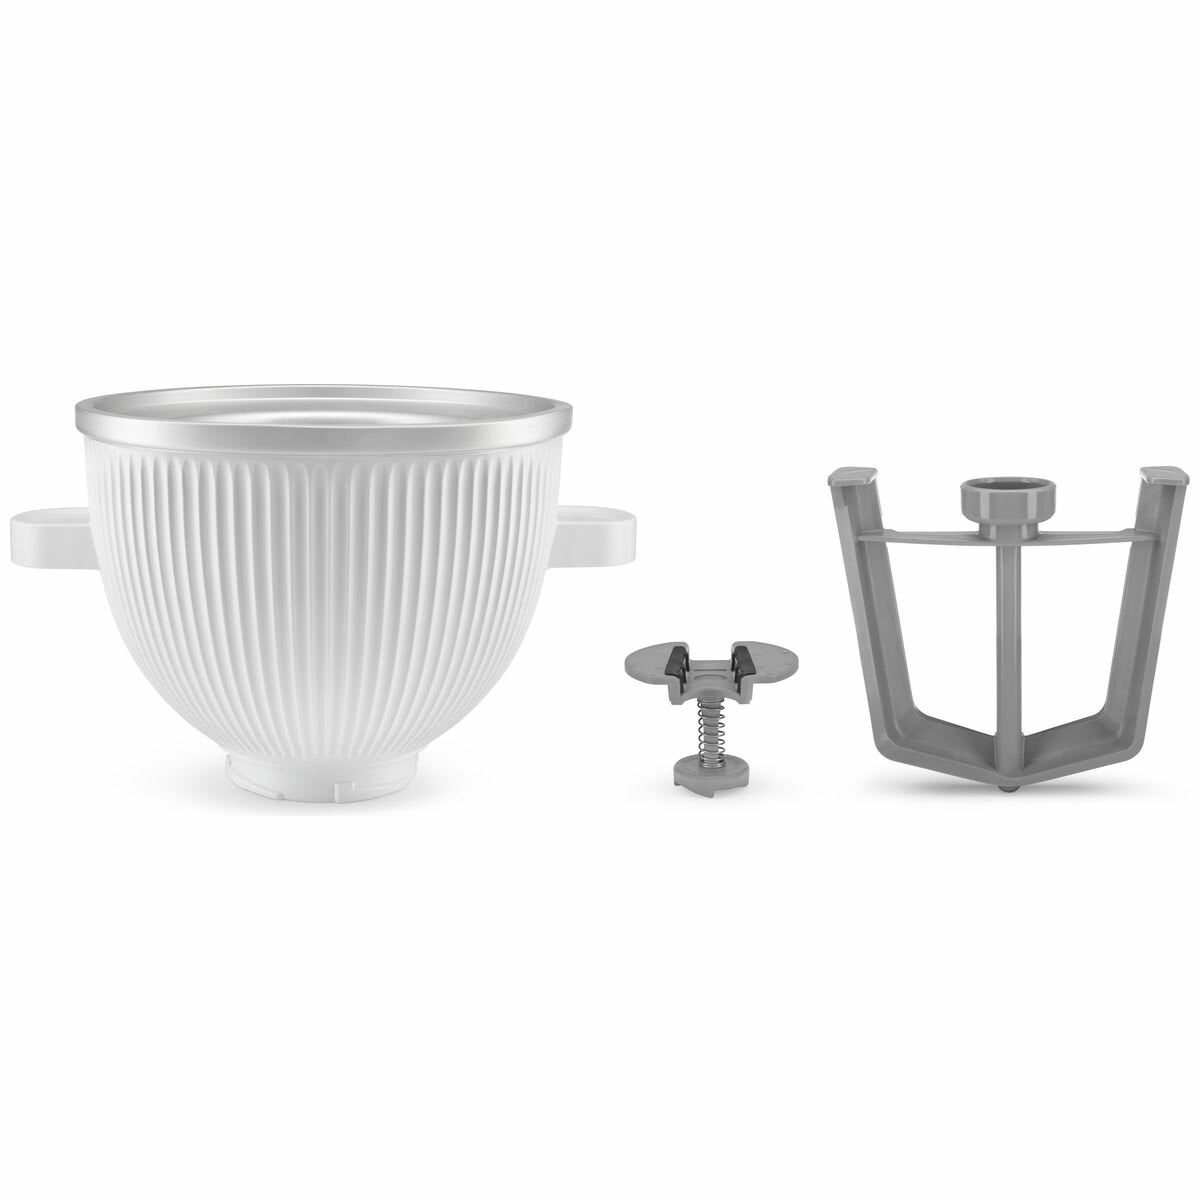 Image of KitchenAid Ice Cream Bowl Attachment for Stand Mixer White 5KSMICM